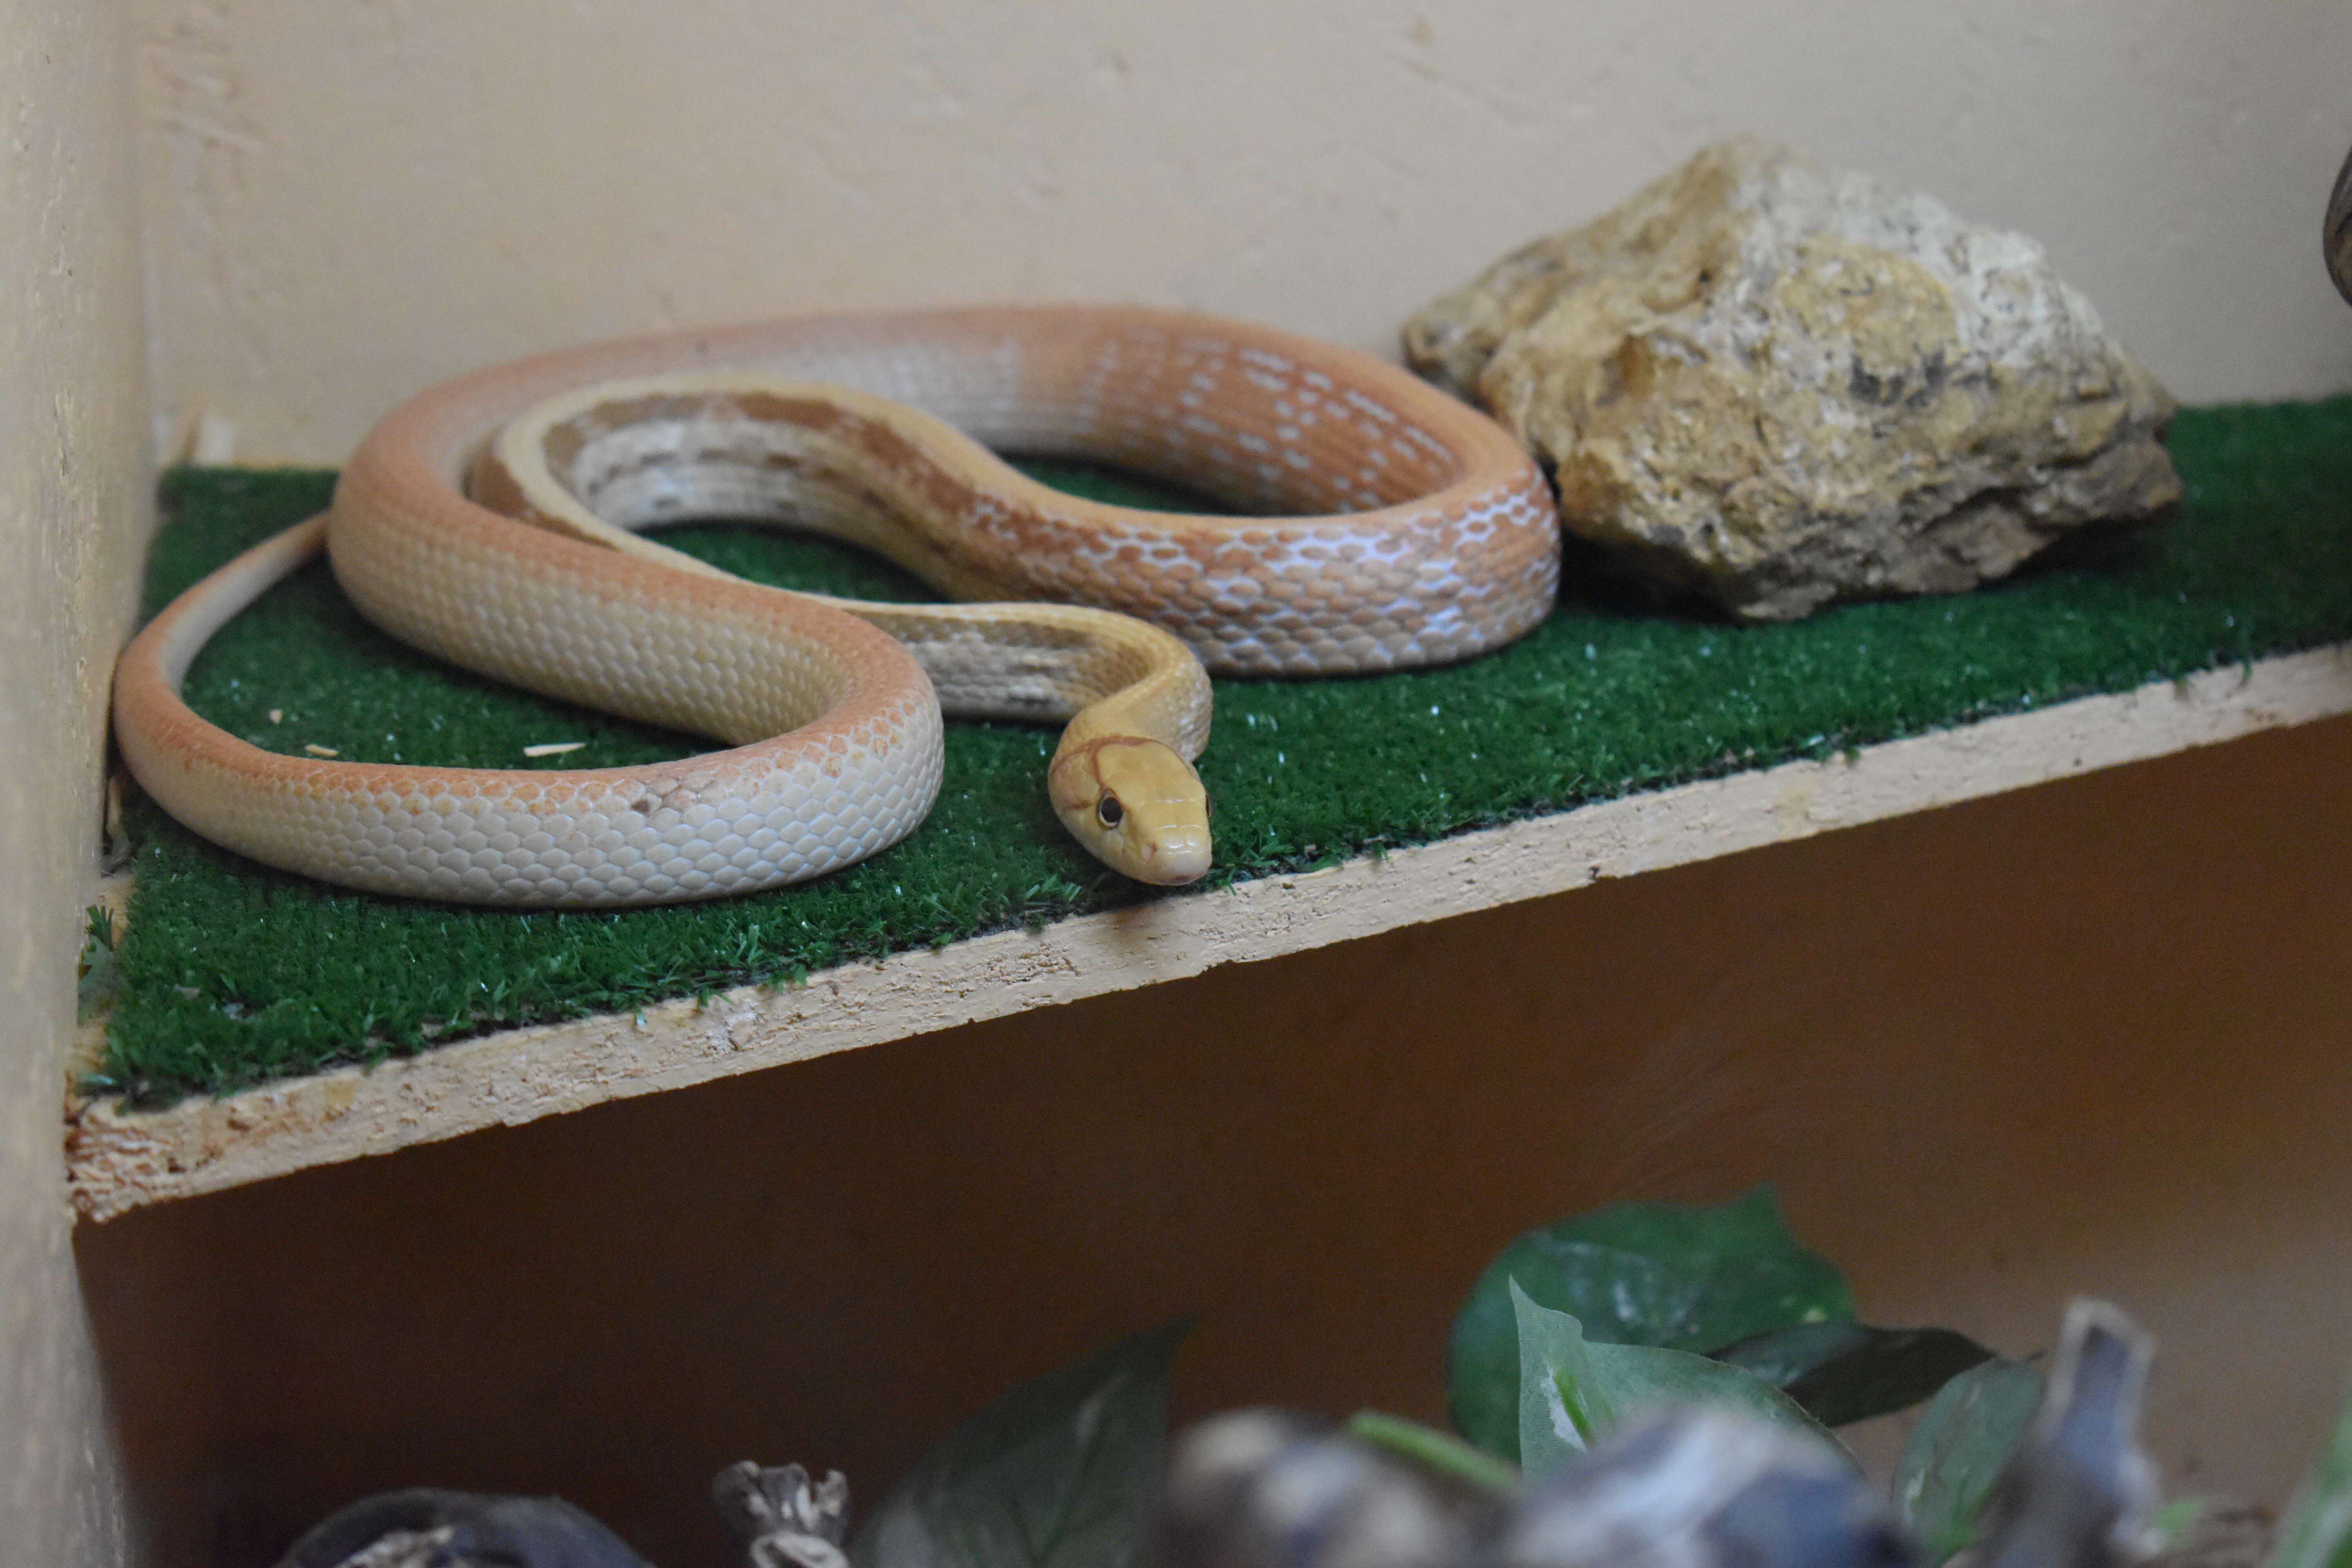 Image of Copper-headed Trinket Snake